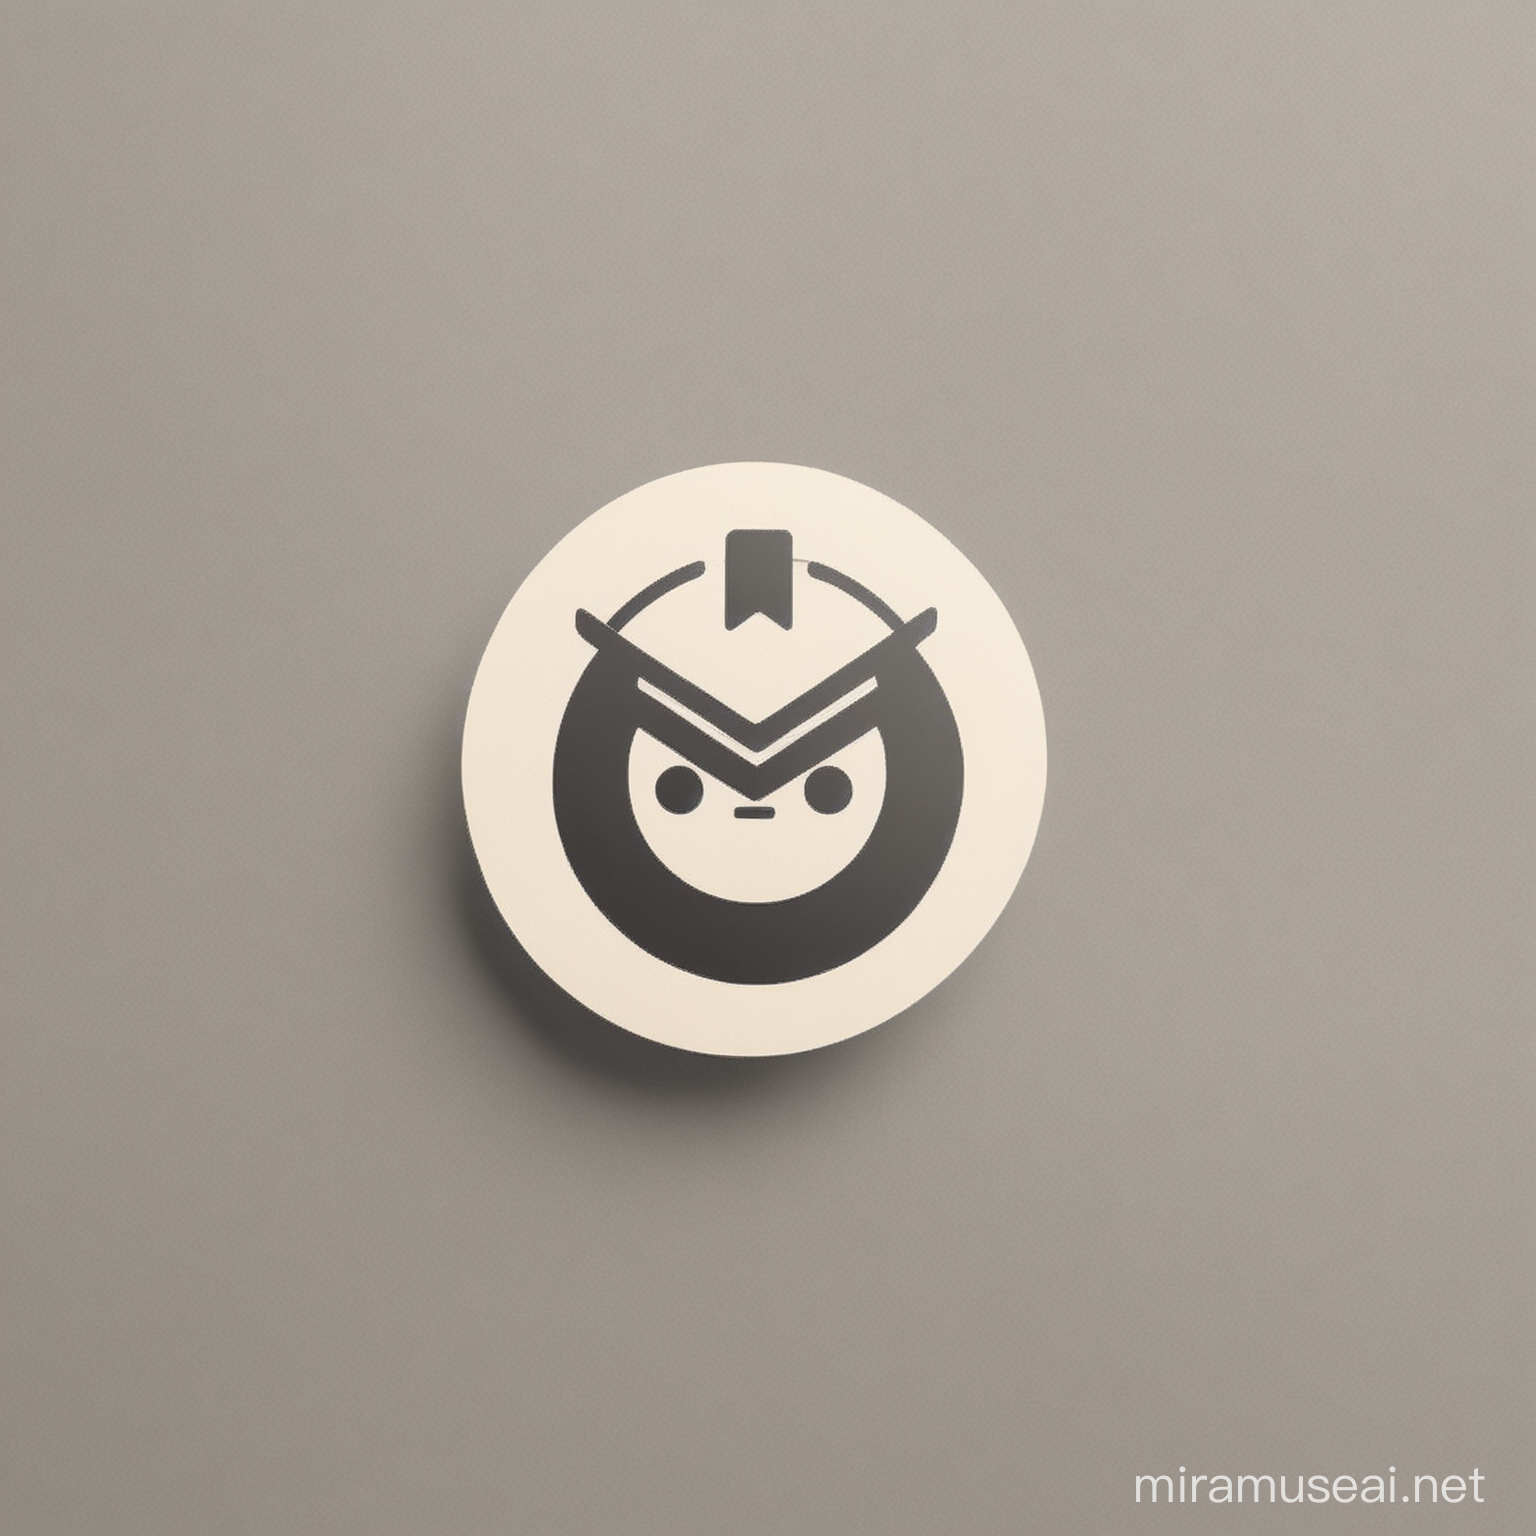 minimalistic logo about kintaro, for digital company